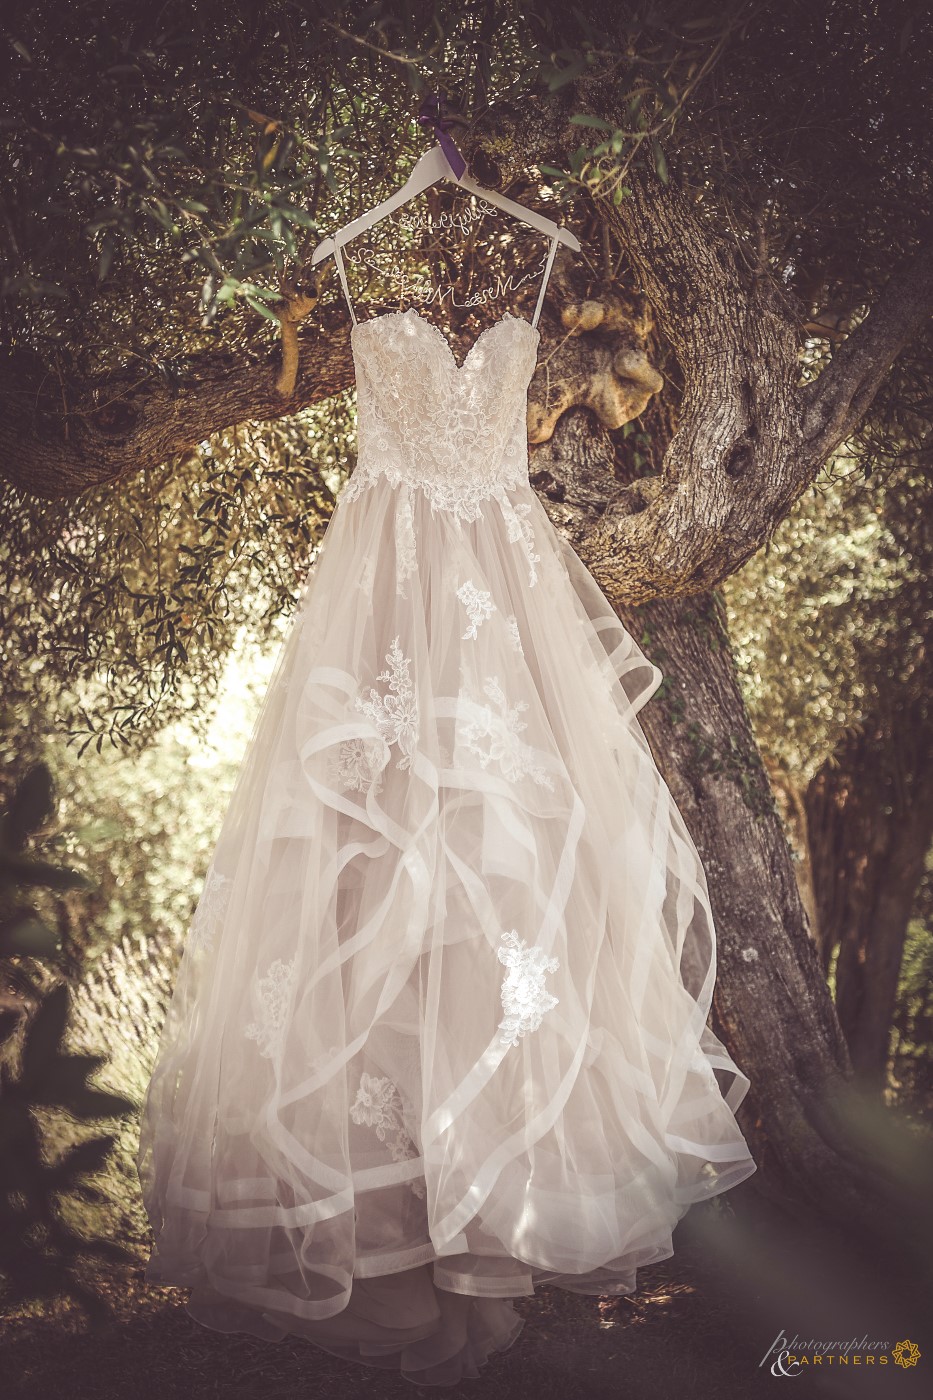 The bride's dress 🍃